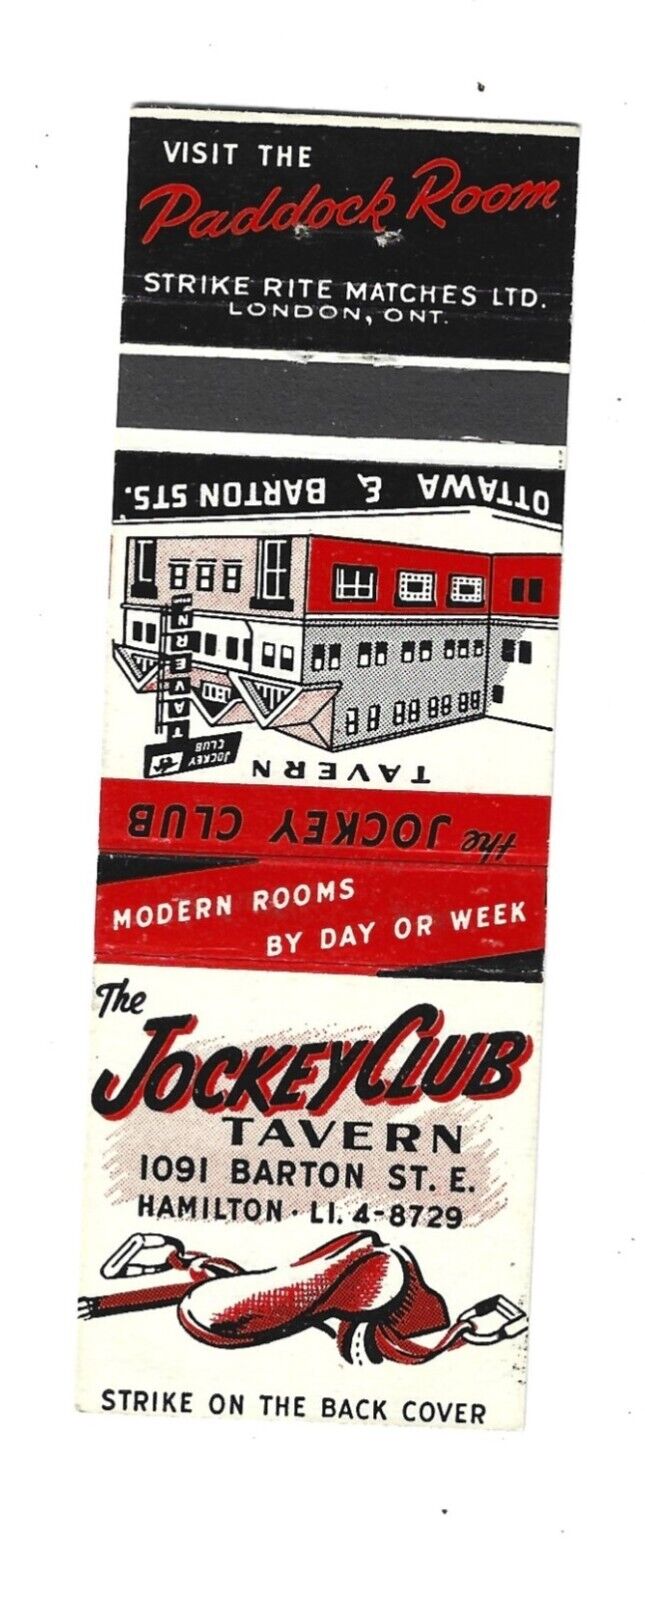 Jockey Club Tavern   Matchcover  1091 Barton St. E.    Hamilton, Canada